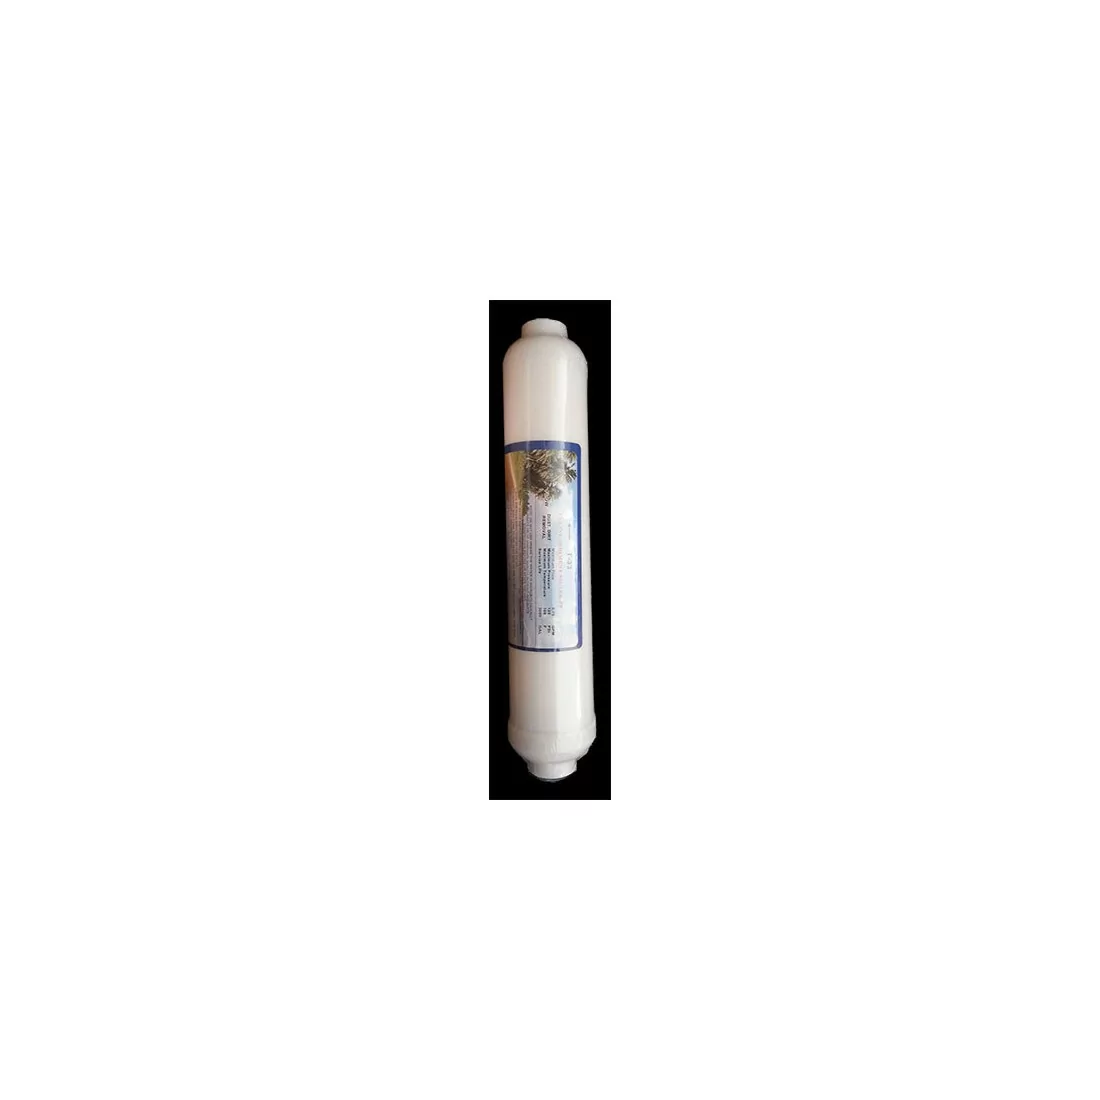 Sediment cartridge for reverse osmosis